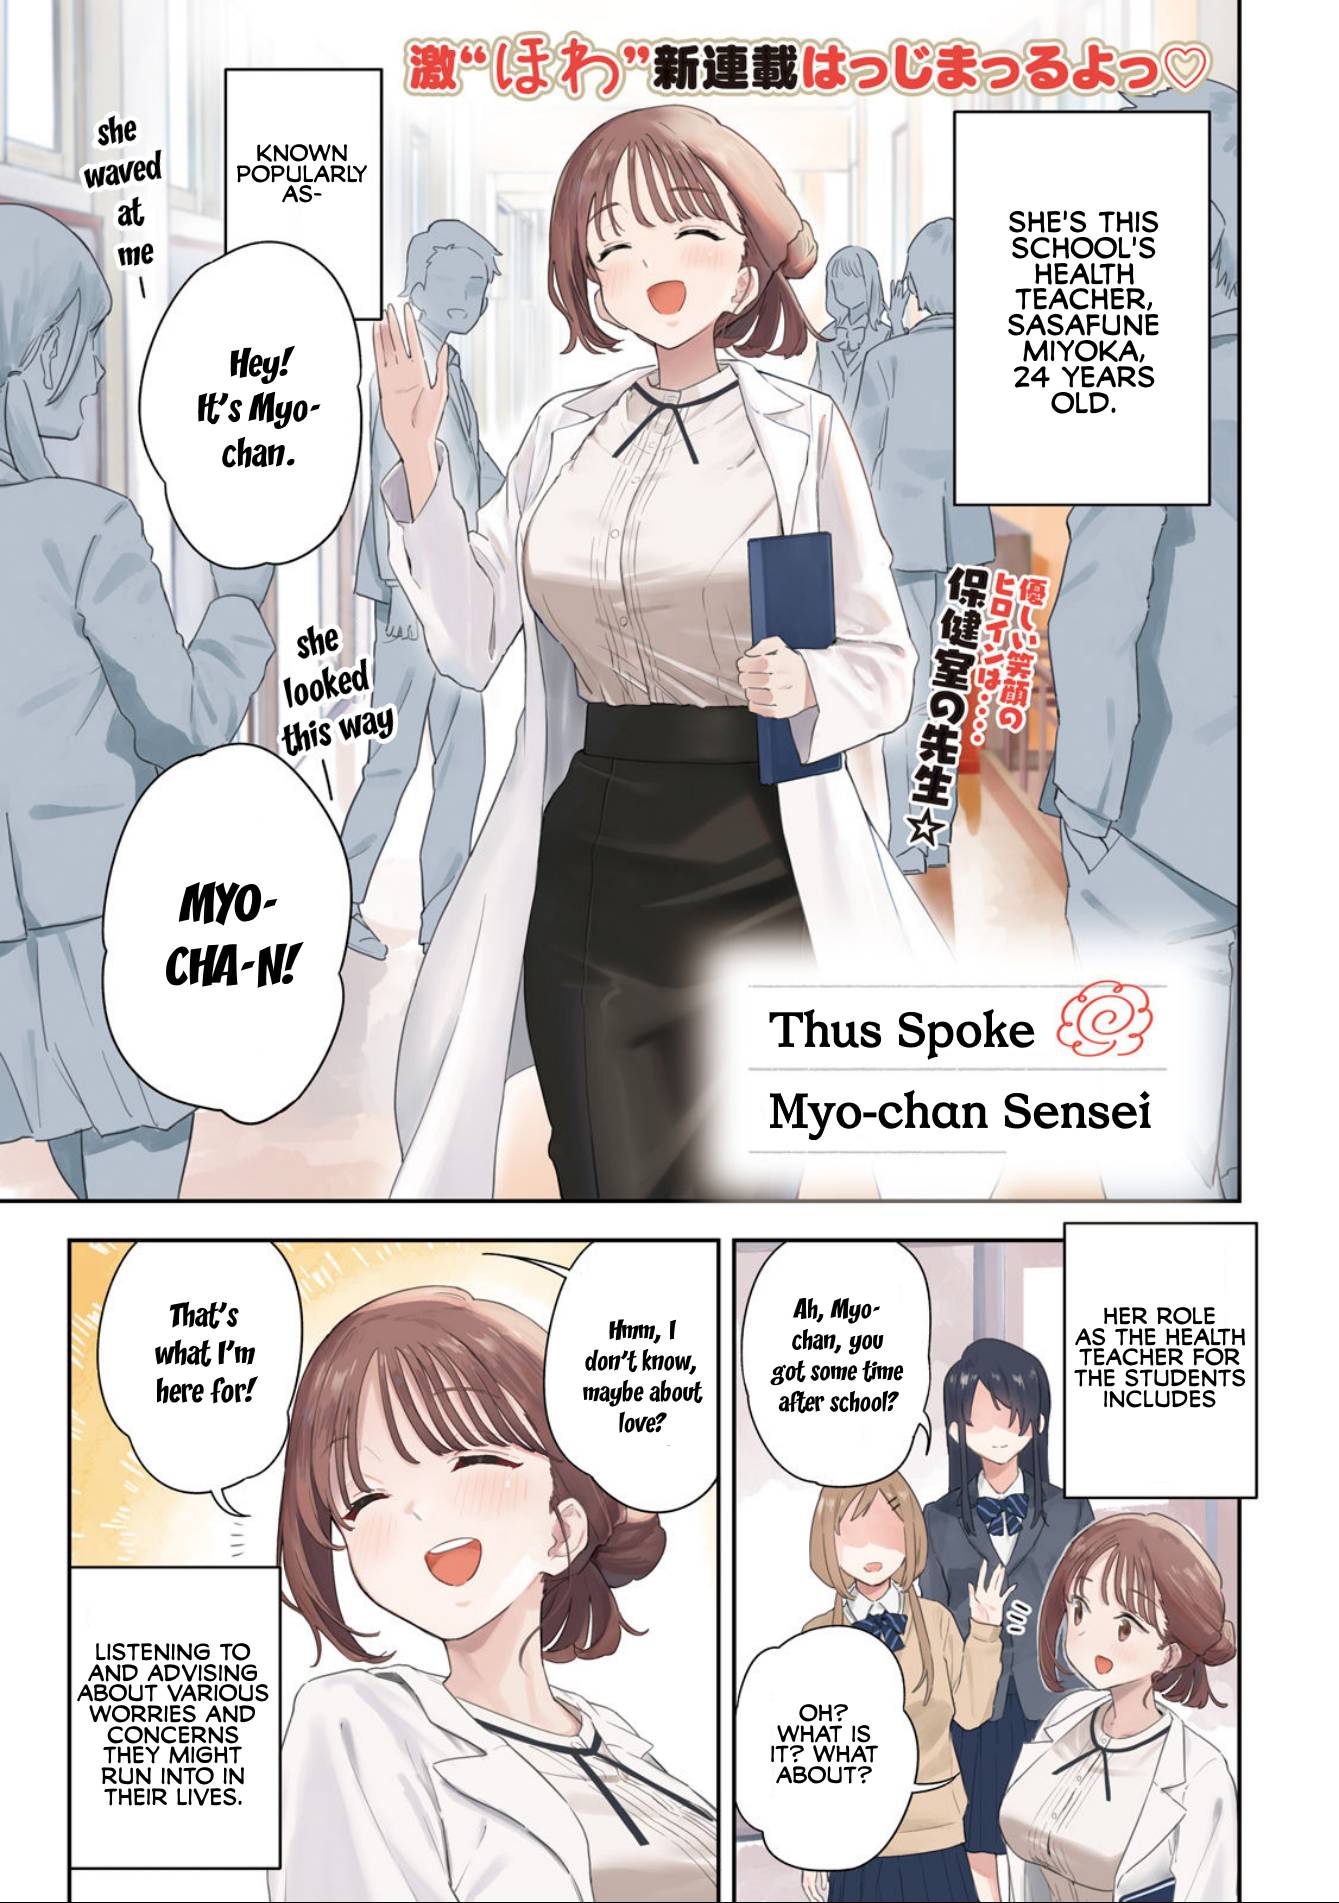 Miyo-Chan Sensei Said So - chapter 1 - #1